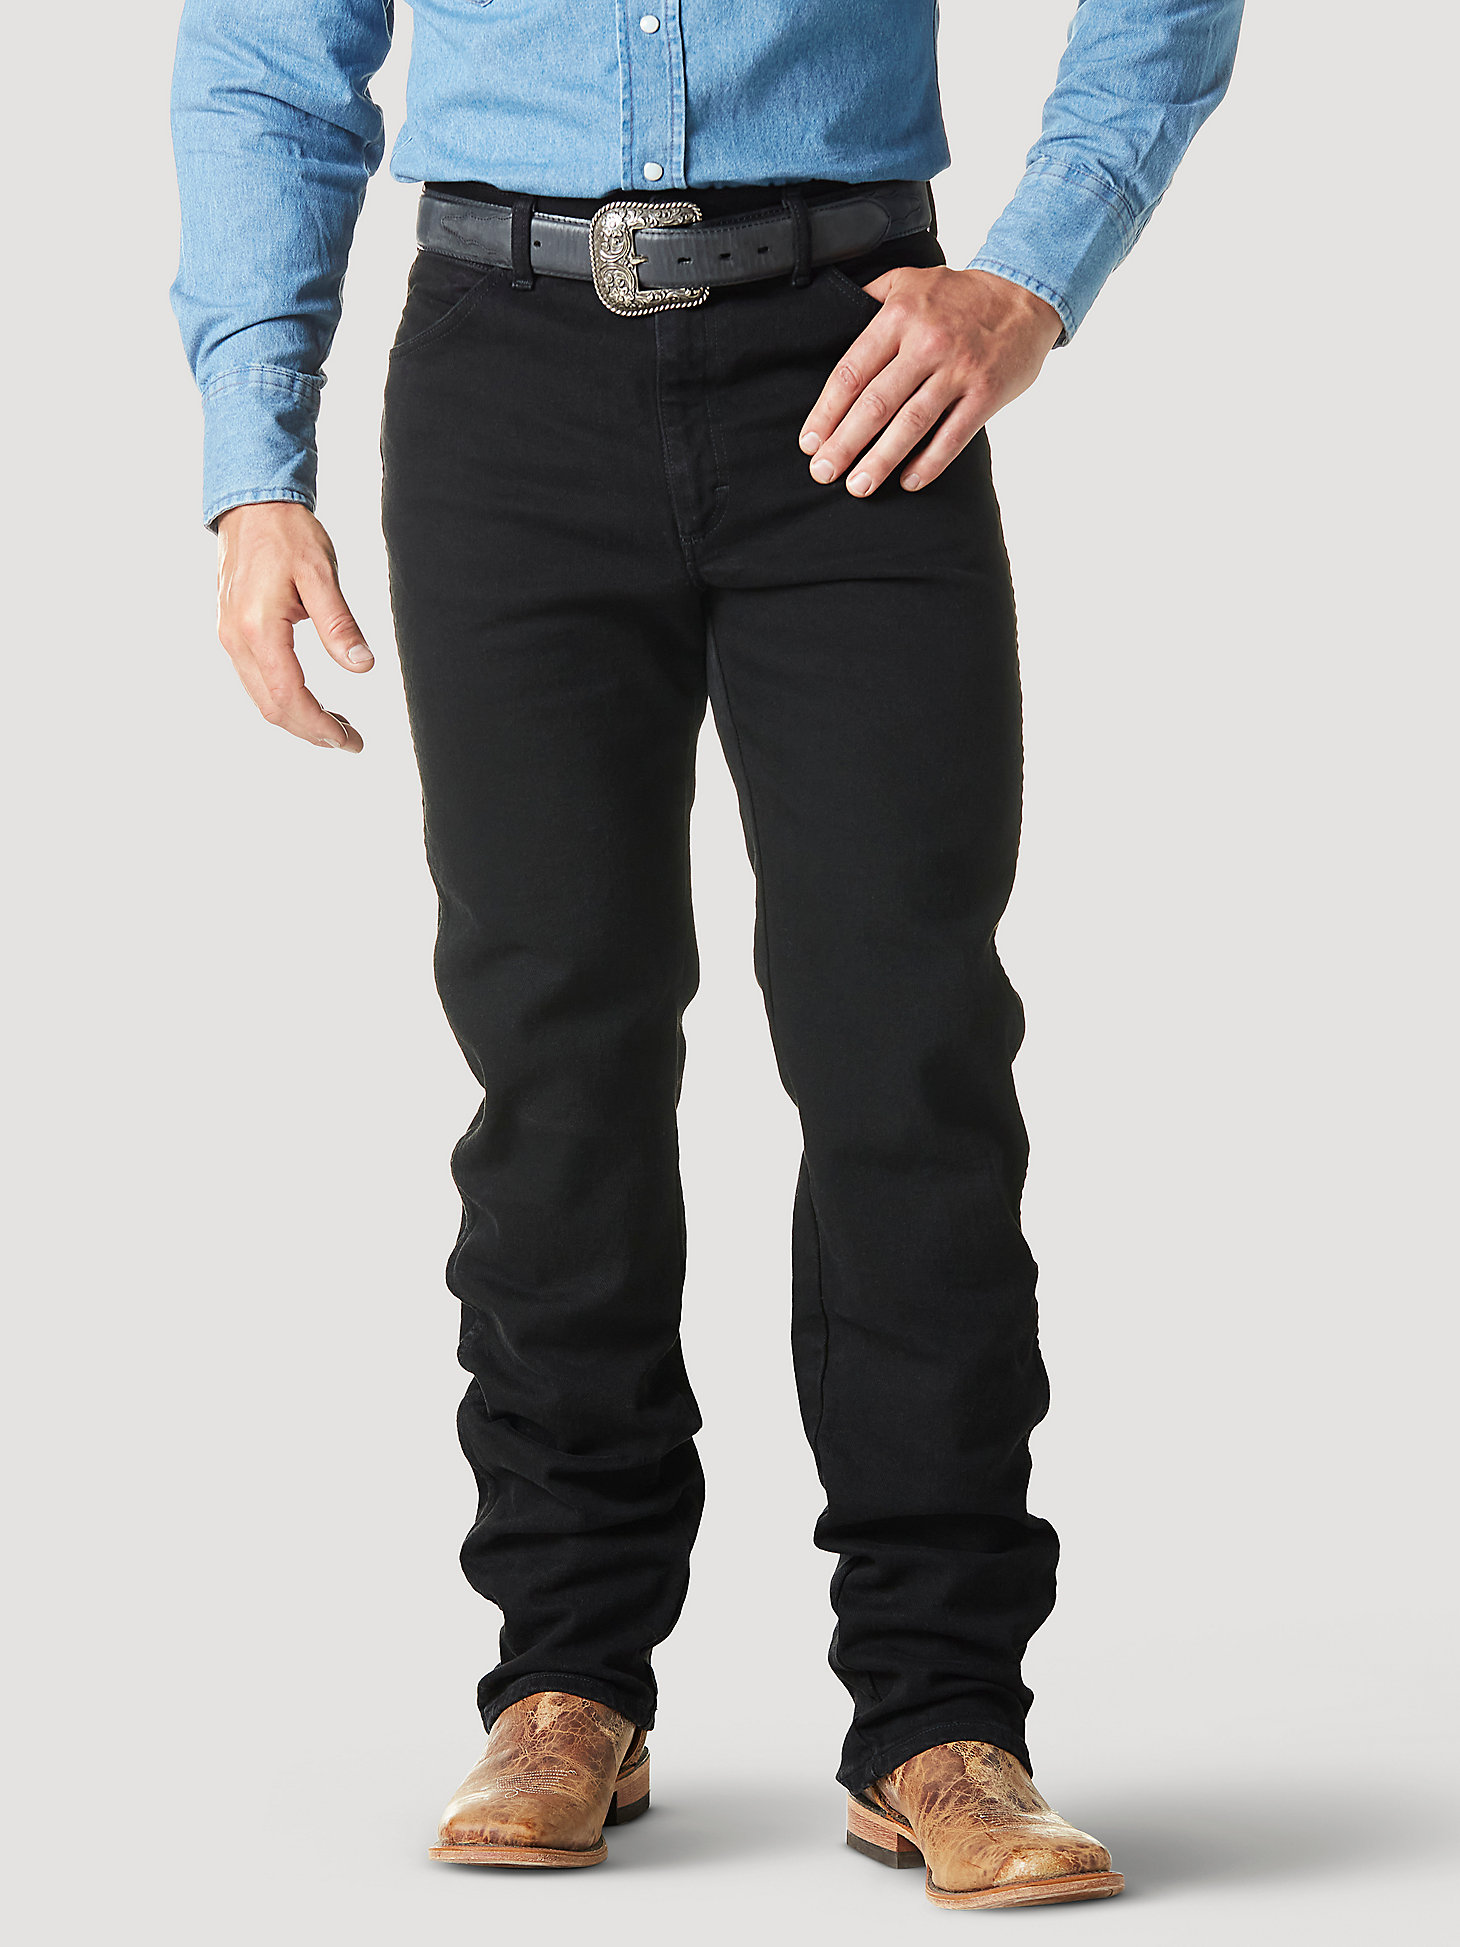 Wrangler® Cowboy Cut® Original Fit Active Flex Jeans in Black alternative view 2